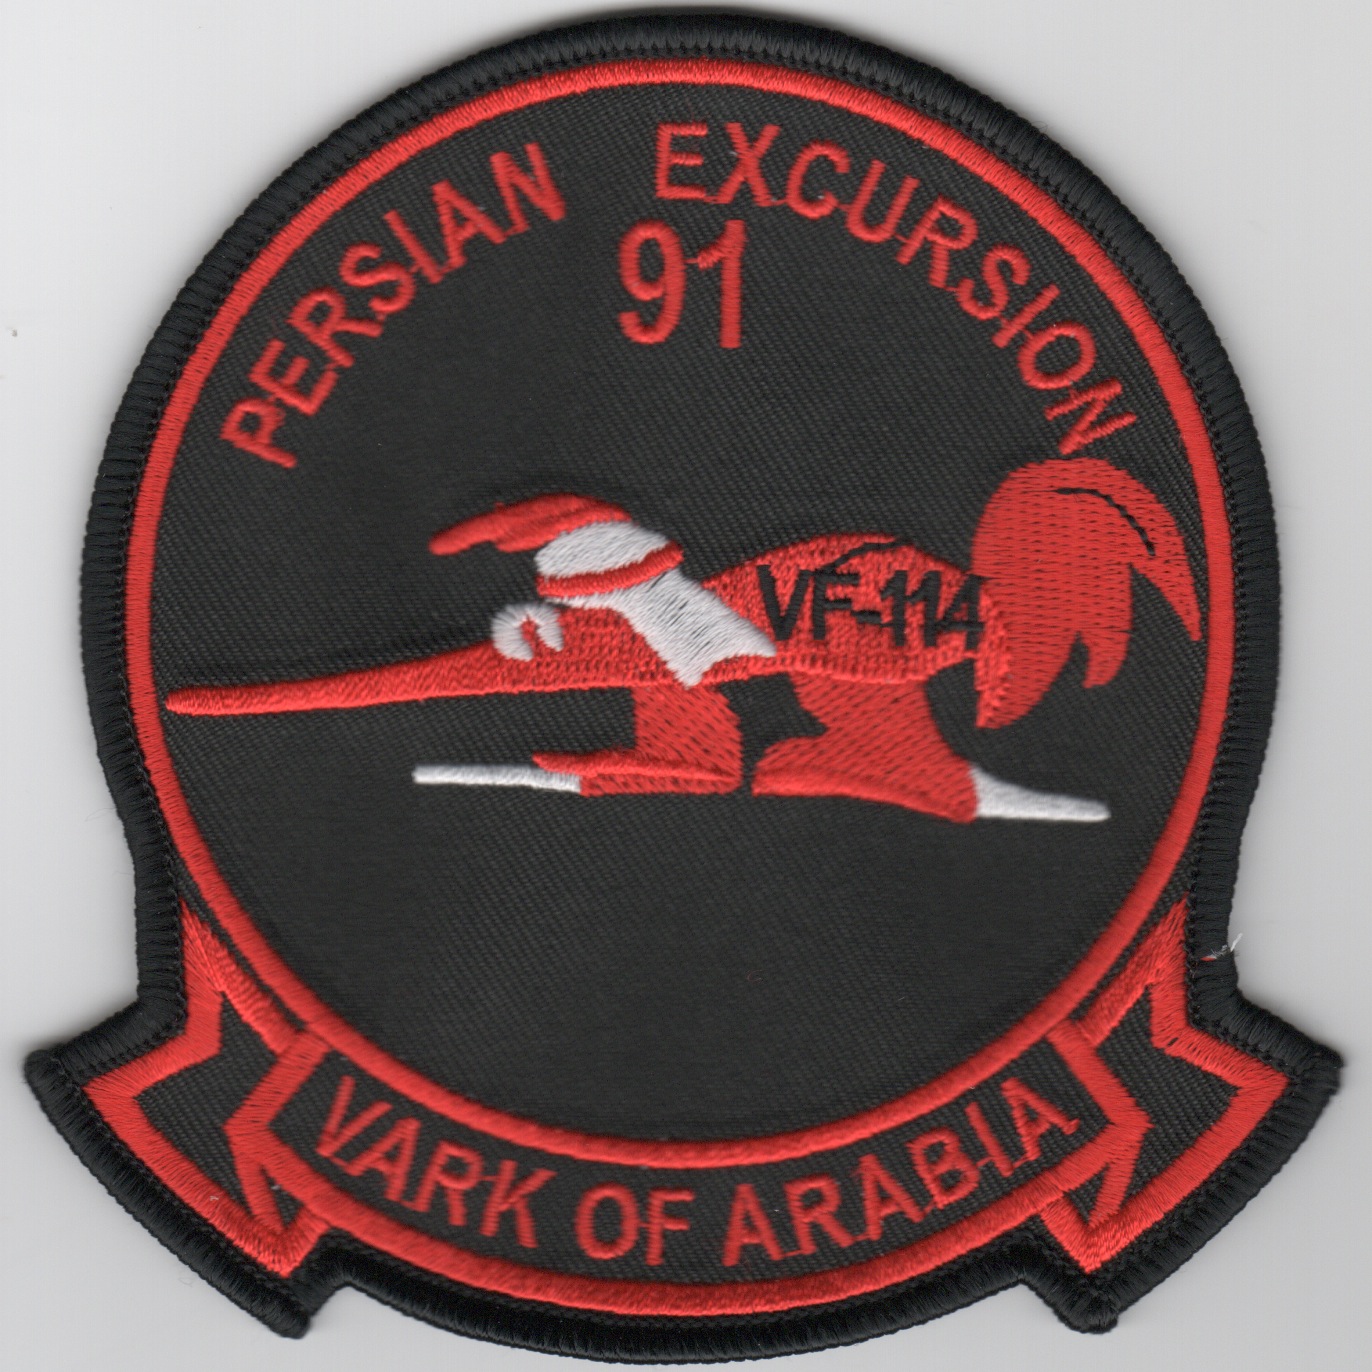 VF-114 1991 'Vark of Arabia' Patch